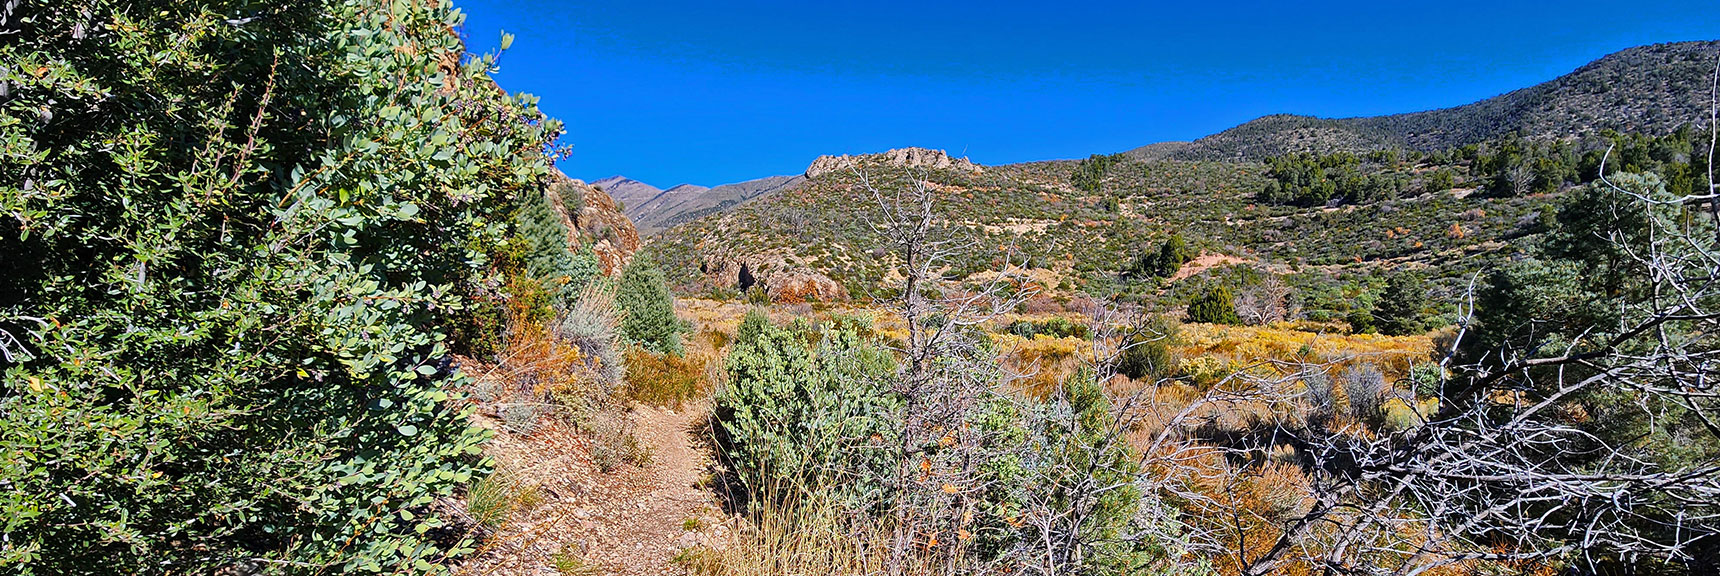 Trail Descends to Lovell Canyon Wash at Base of Rocky Ridgeline. | Lovell Canyon Loop Trail | Lovell Canyon Nevada